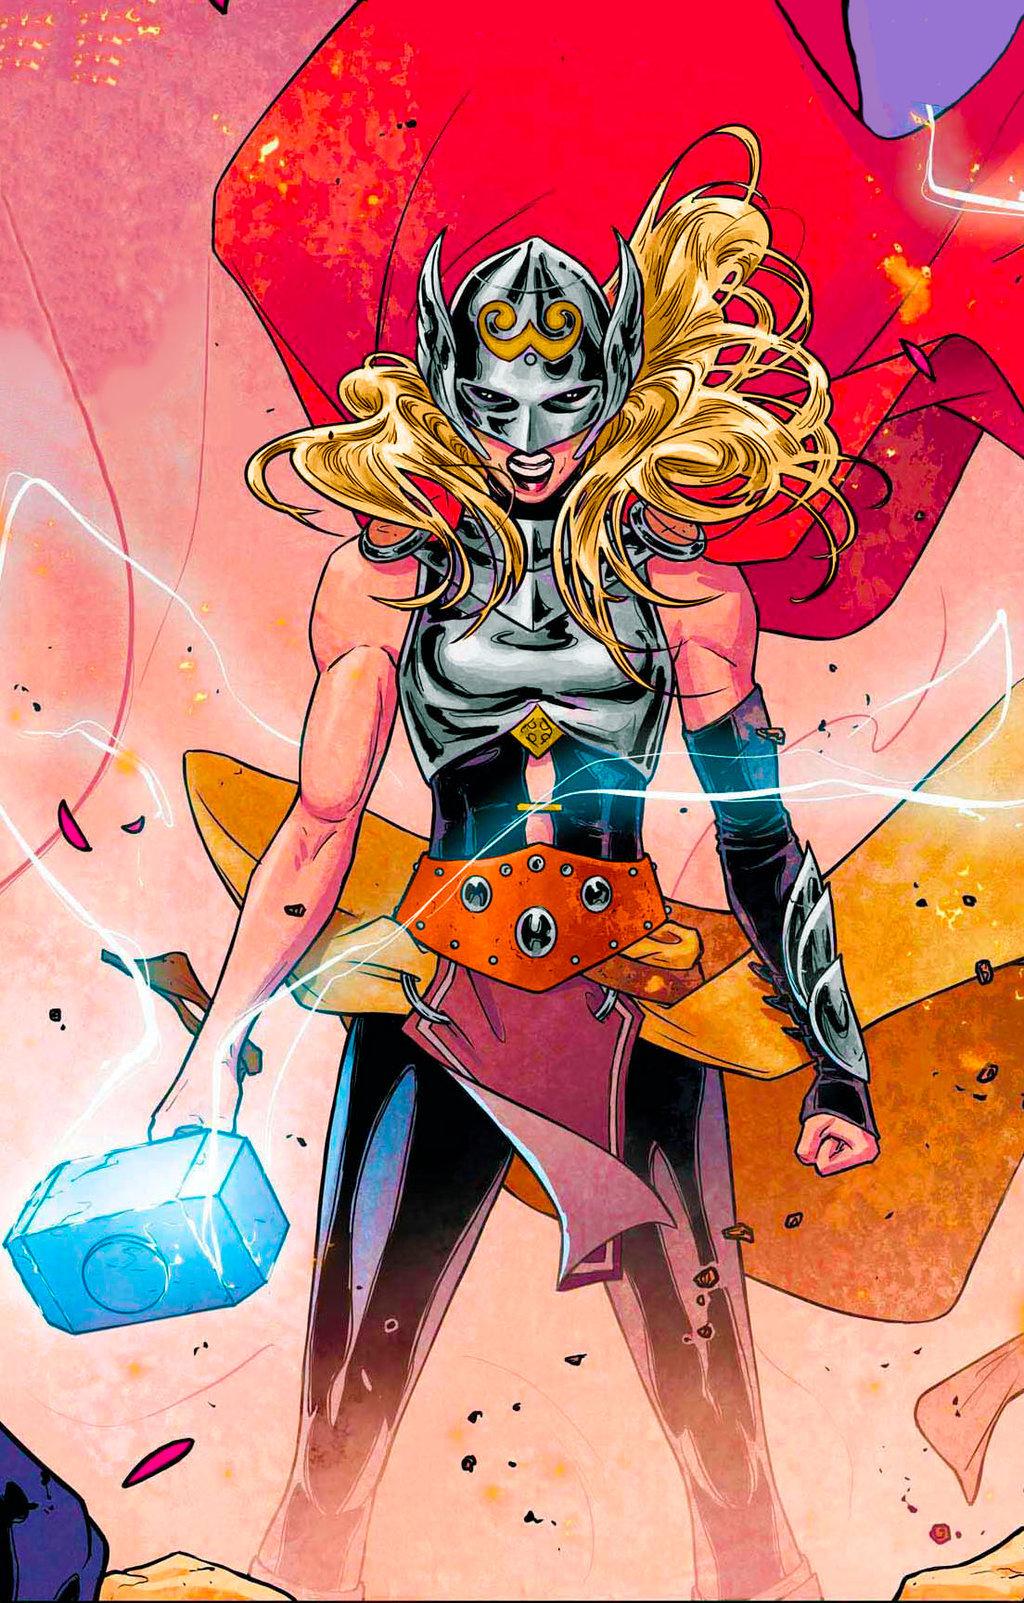 Supergirl vs Jane Foster (Thor)